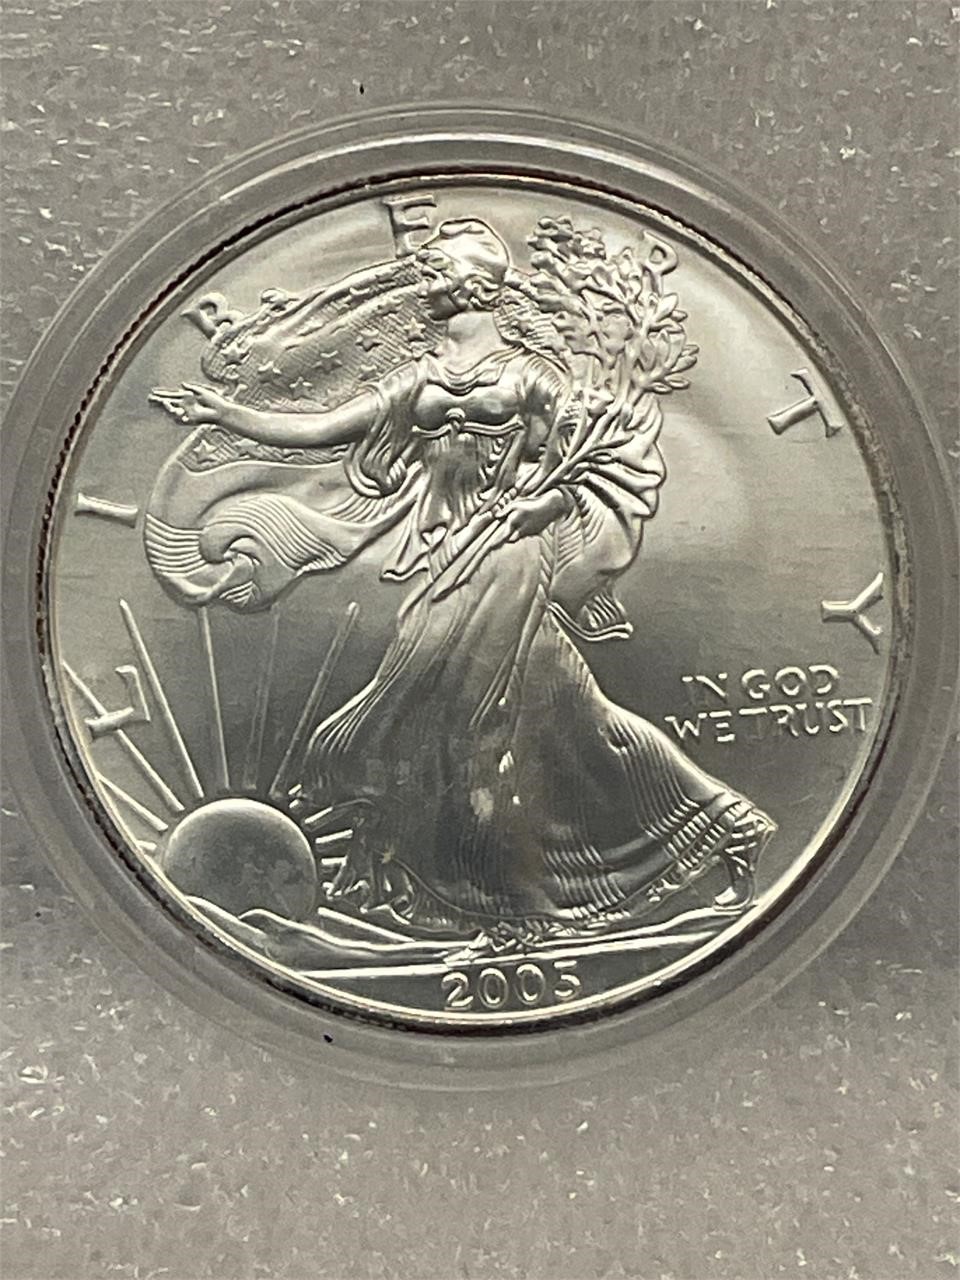 2003 1oz Silver Walking Liberty Dollar